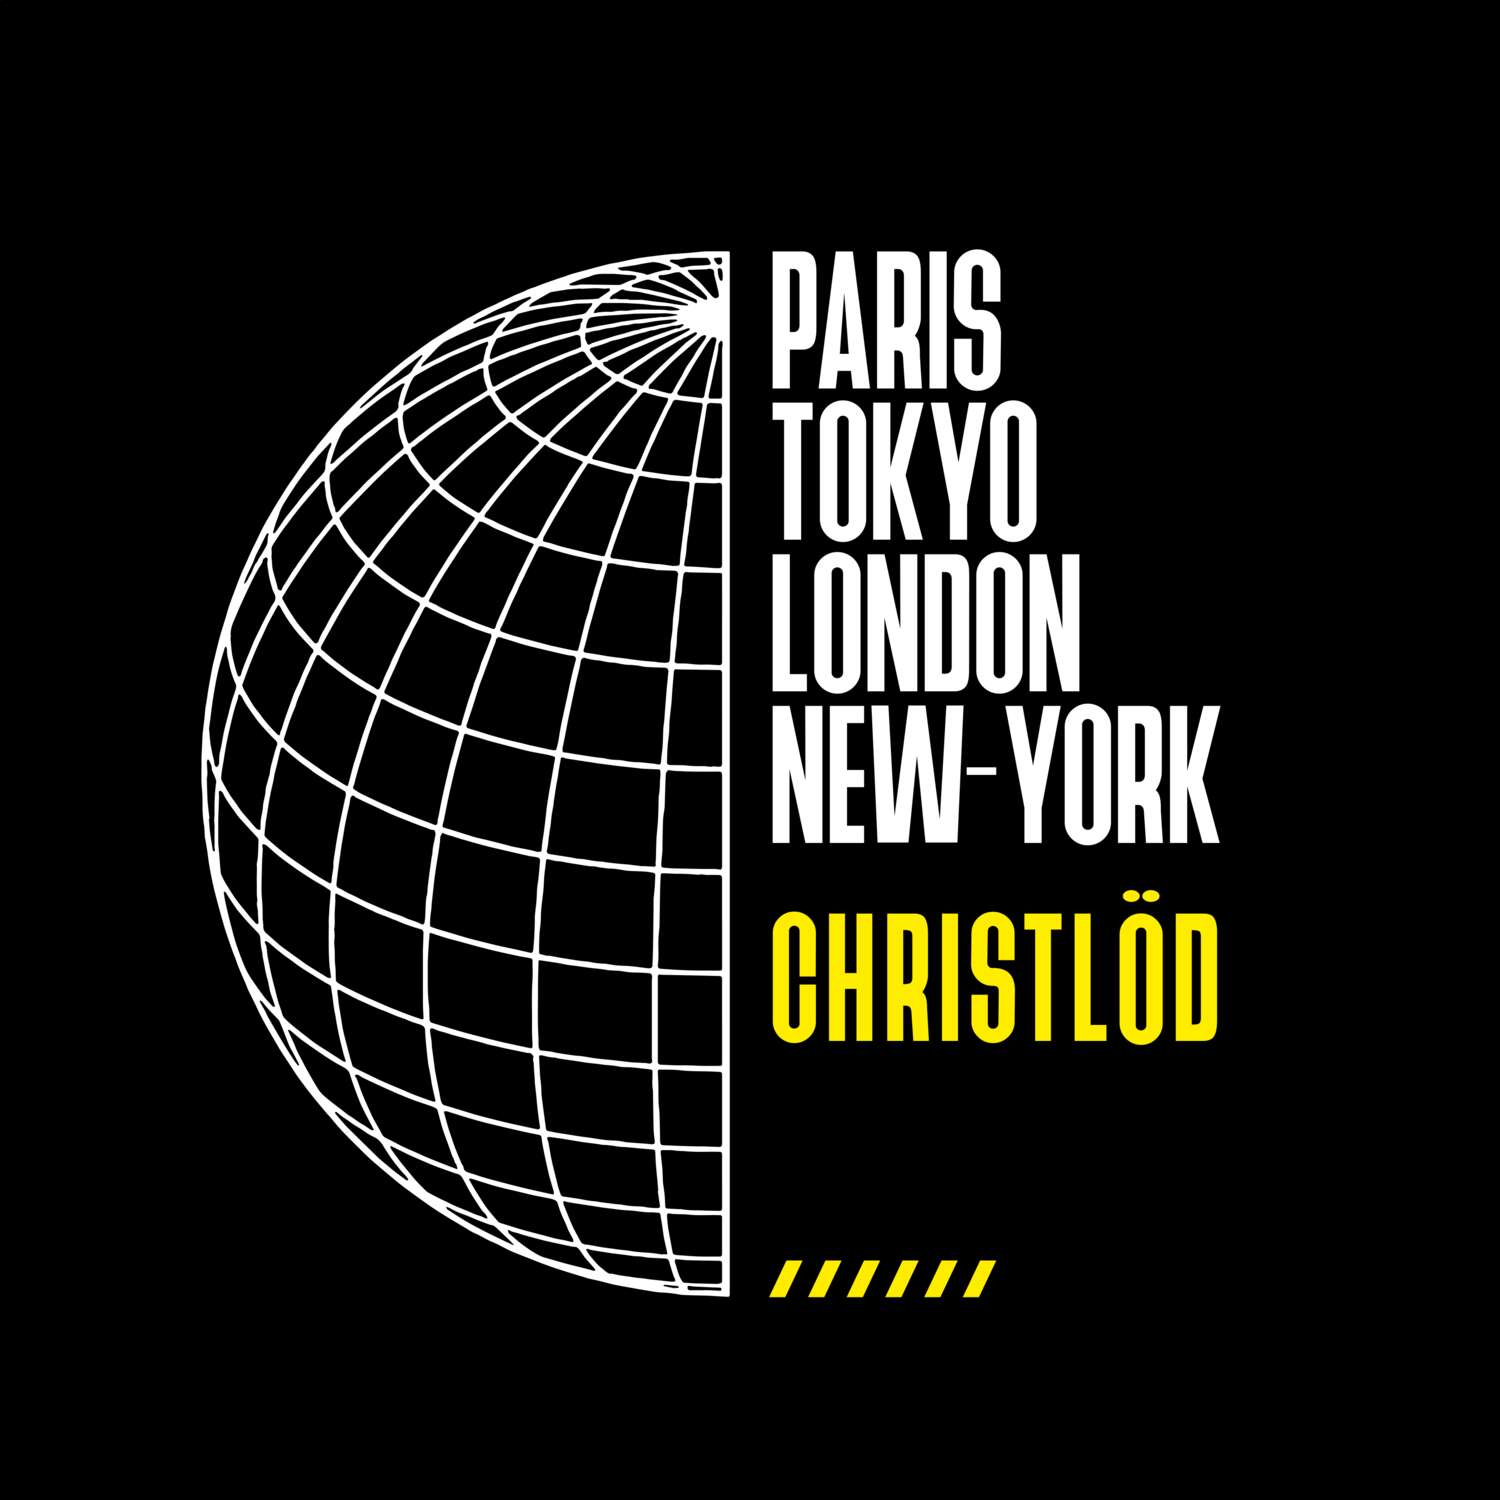 Christlöd T-Shirt »Paris Tokyo London«